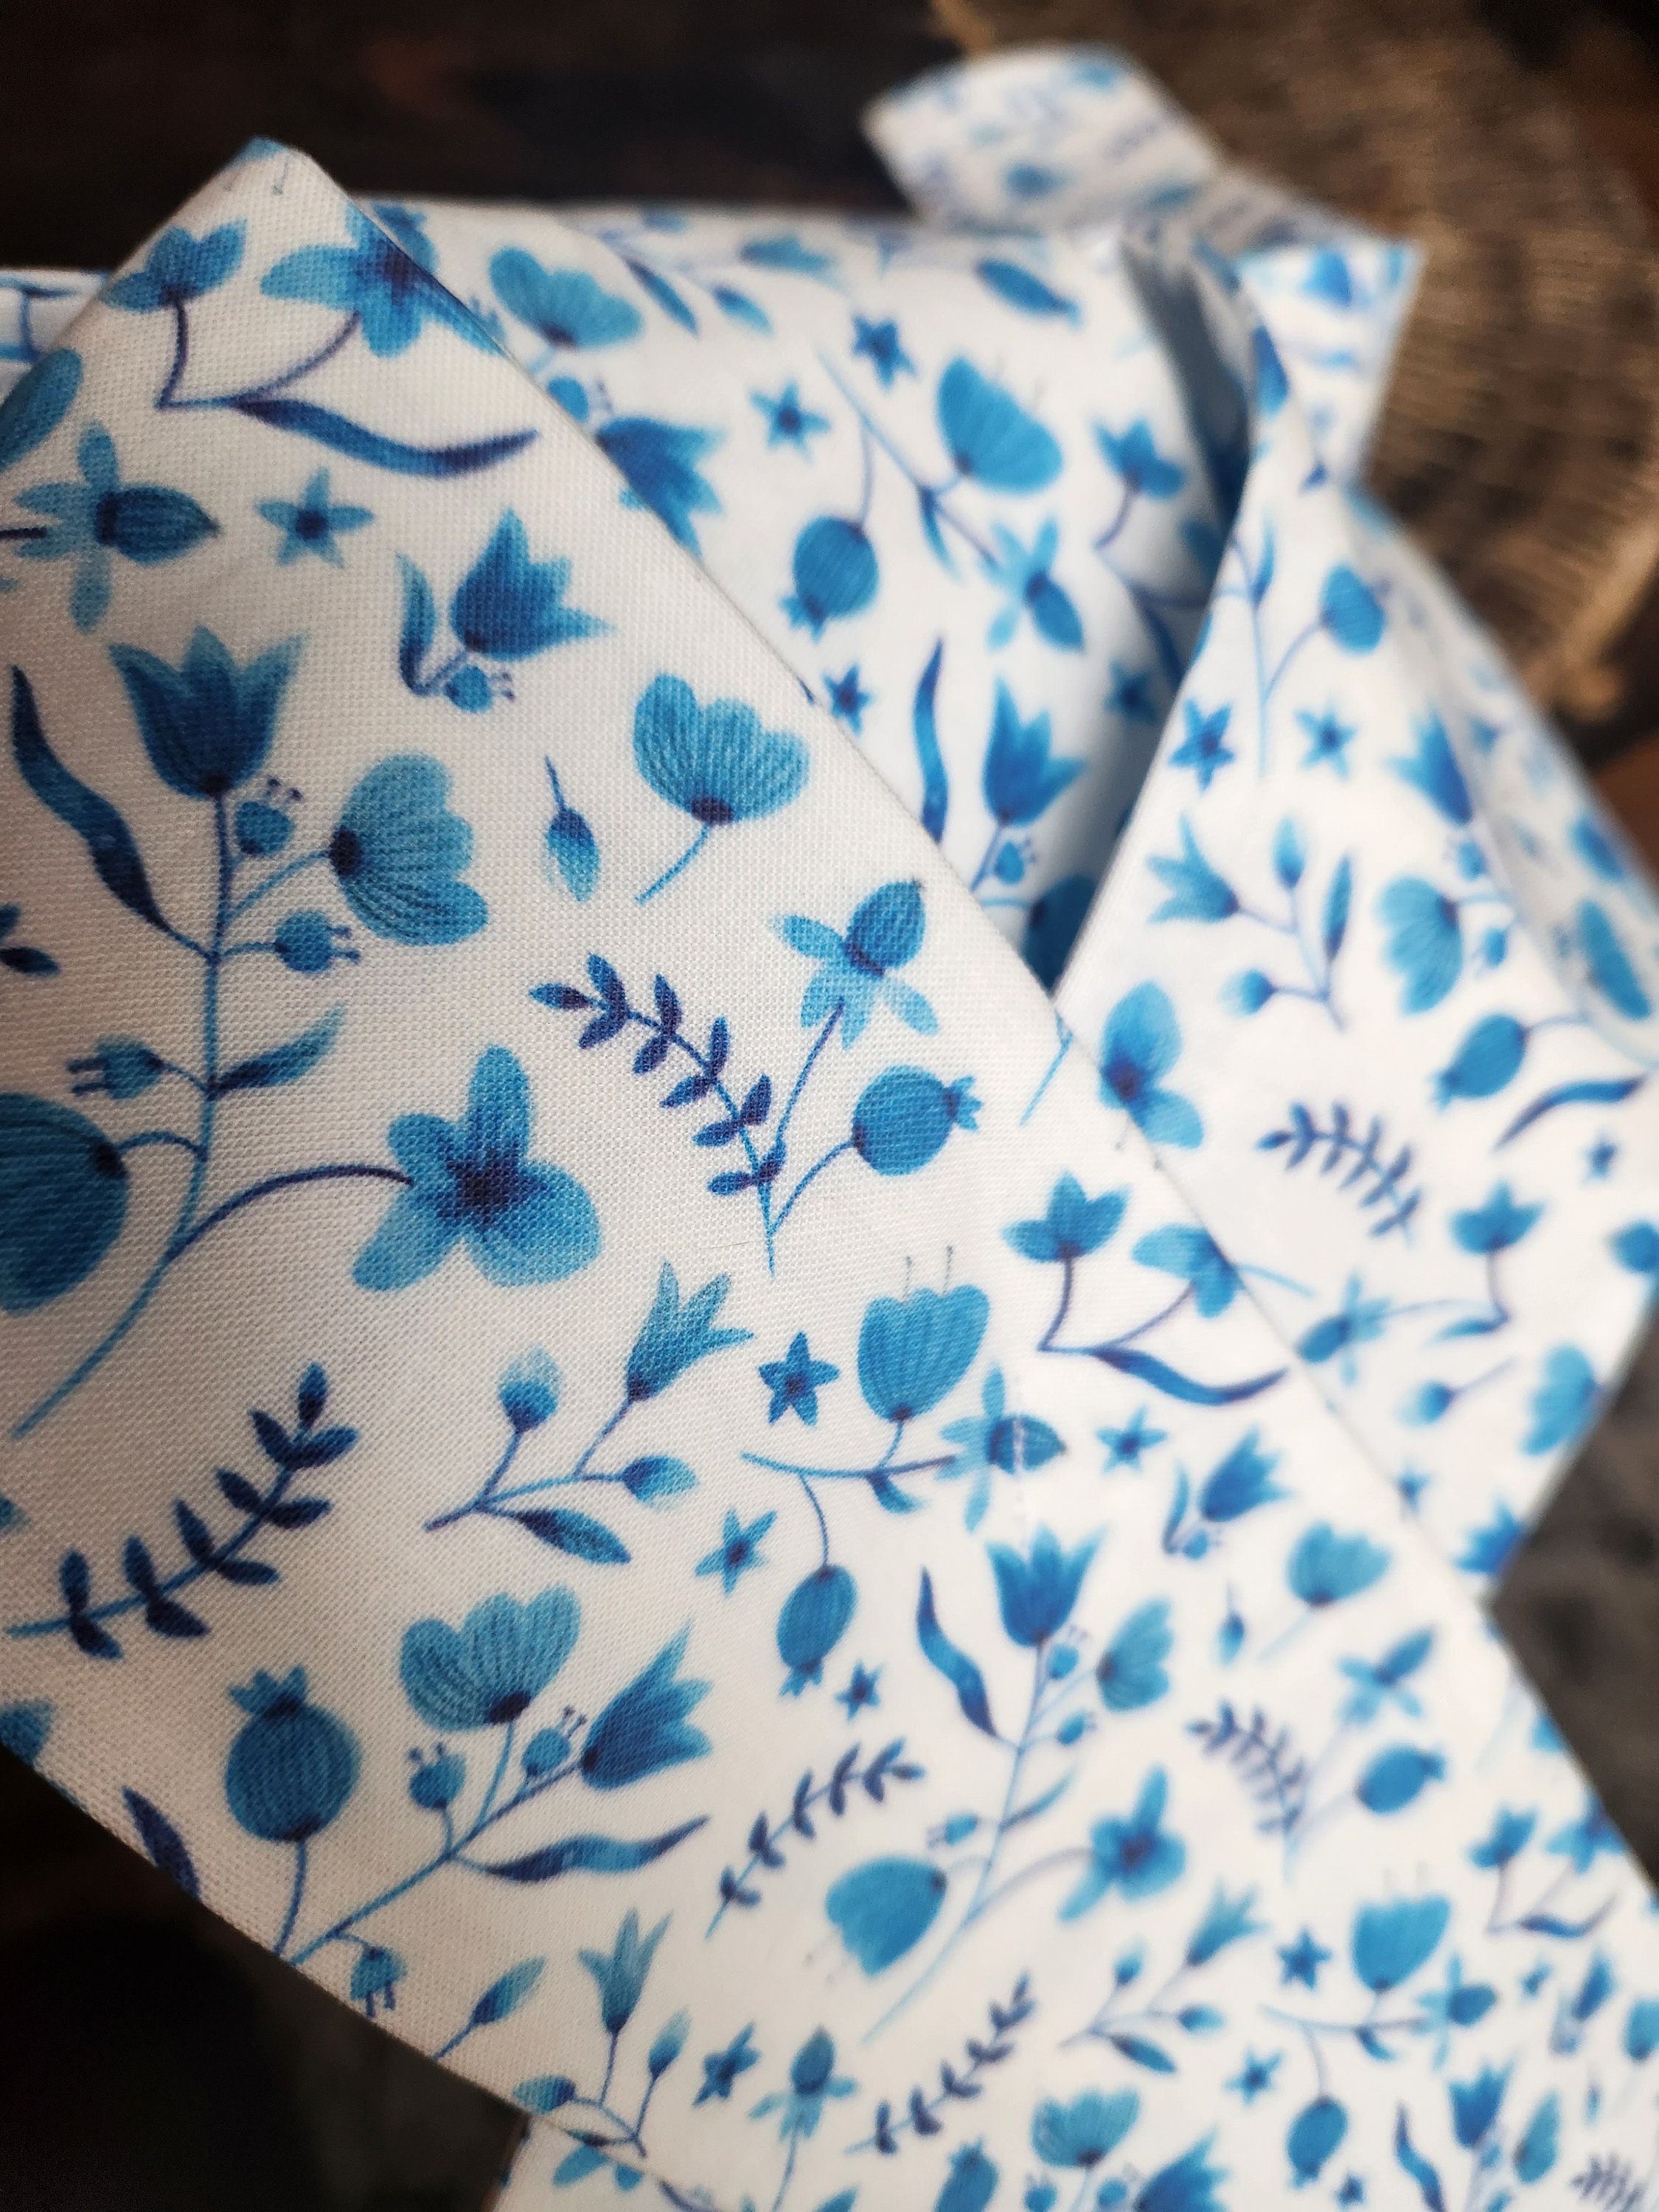 Dara James Designs - #dressage#stocktie#vintagestyle #shadesofblue